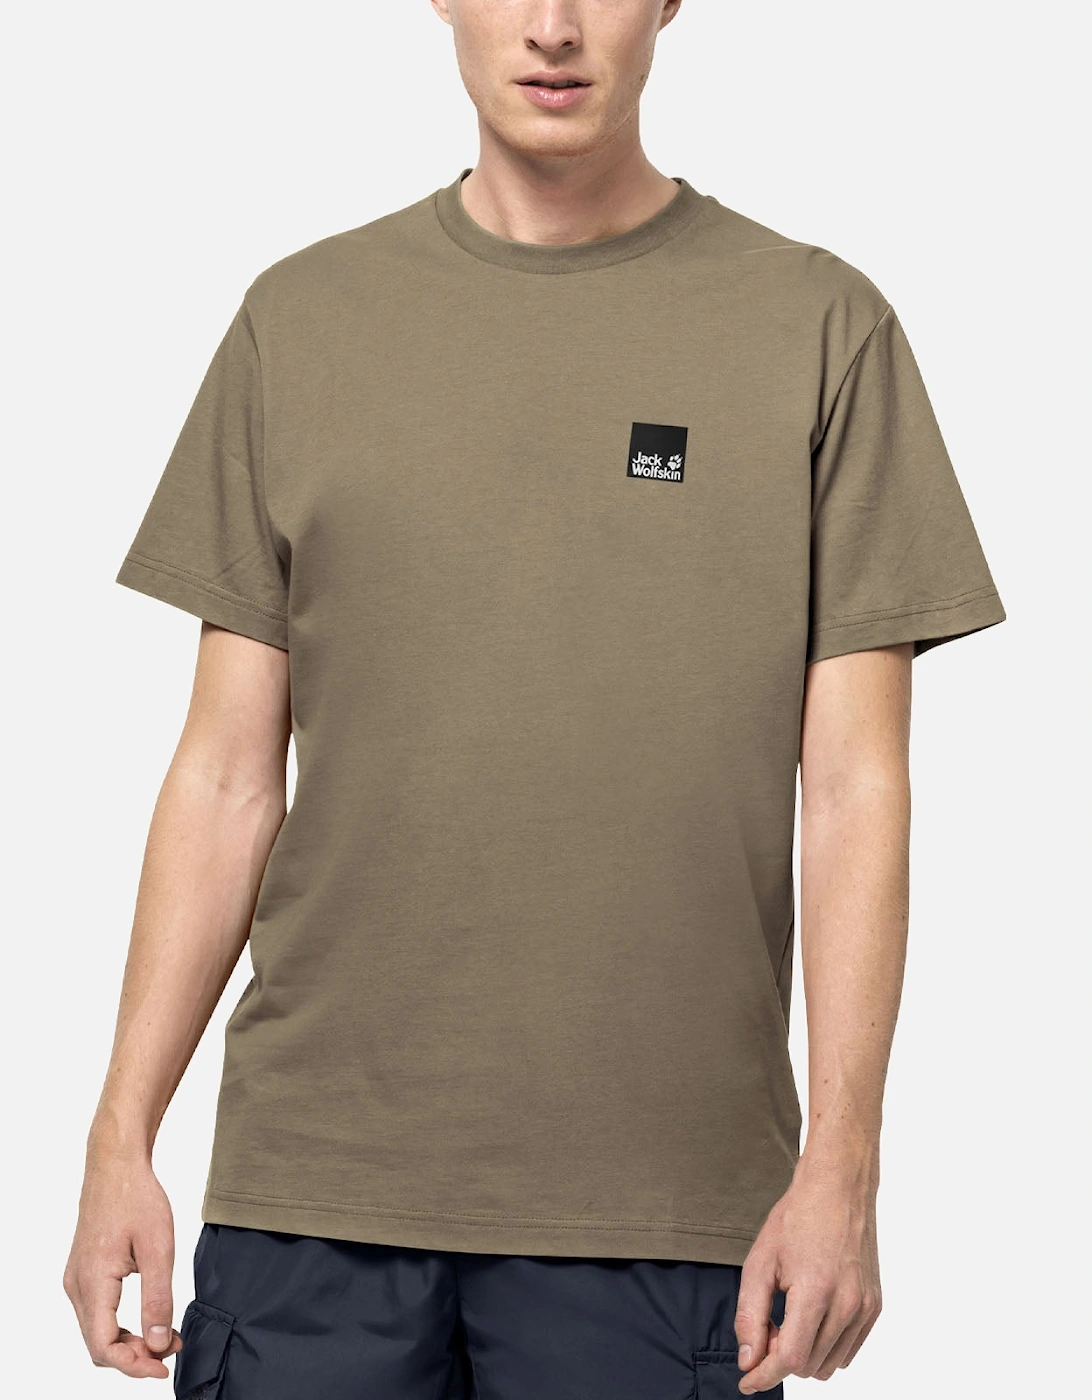 Mens 365 Casual Cotton Short Sleeve T-Shirt Top Tee